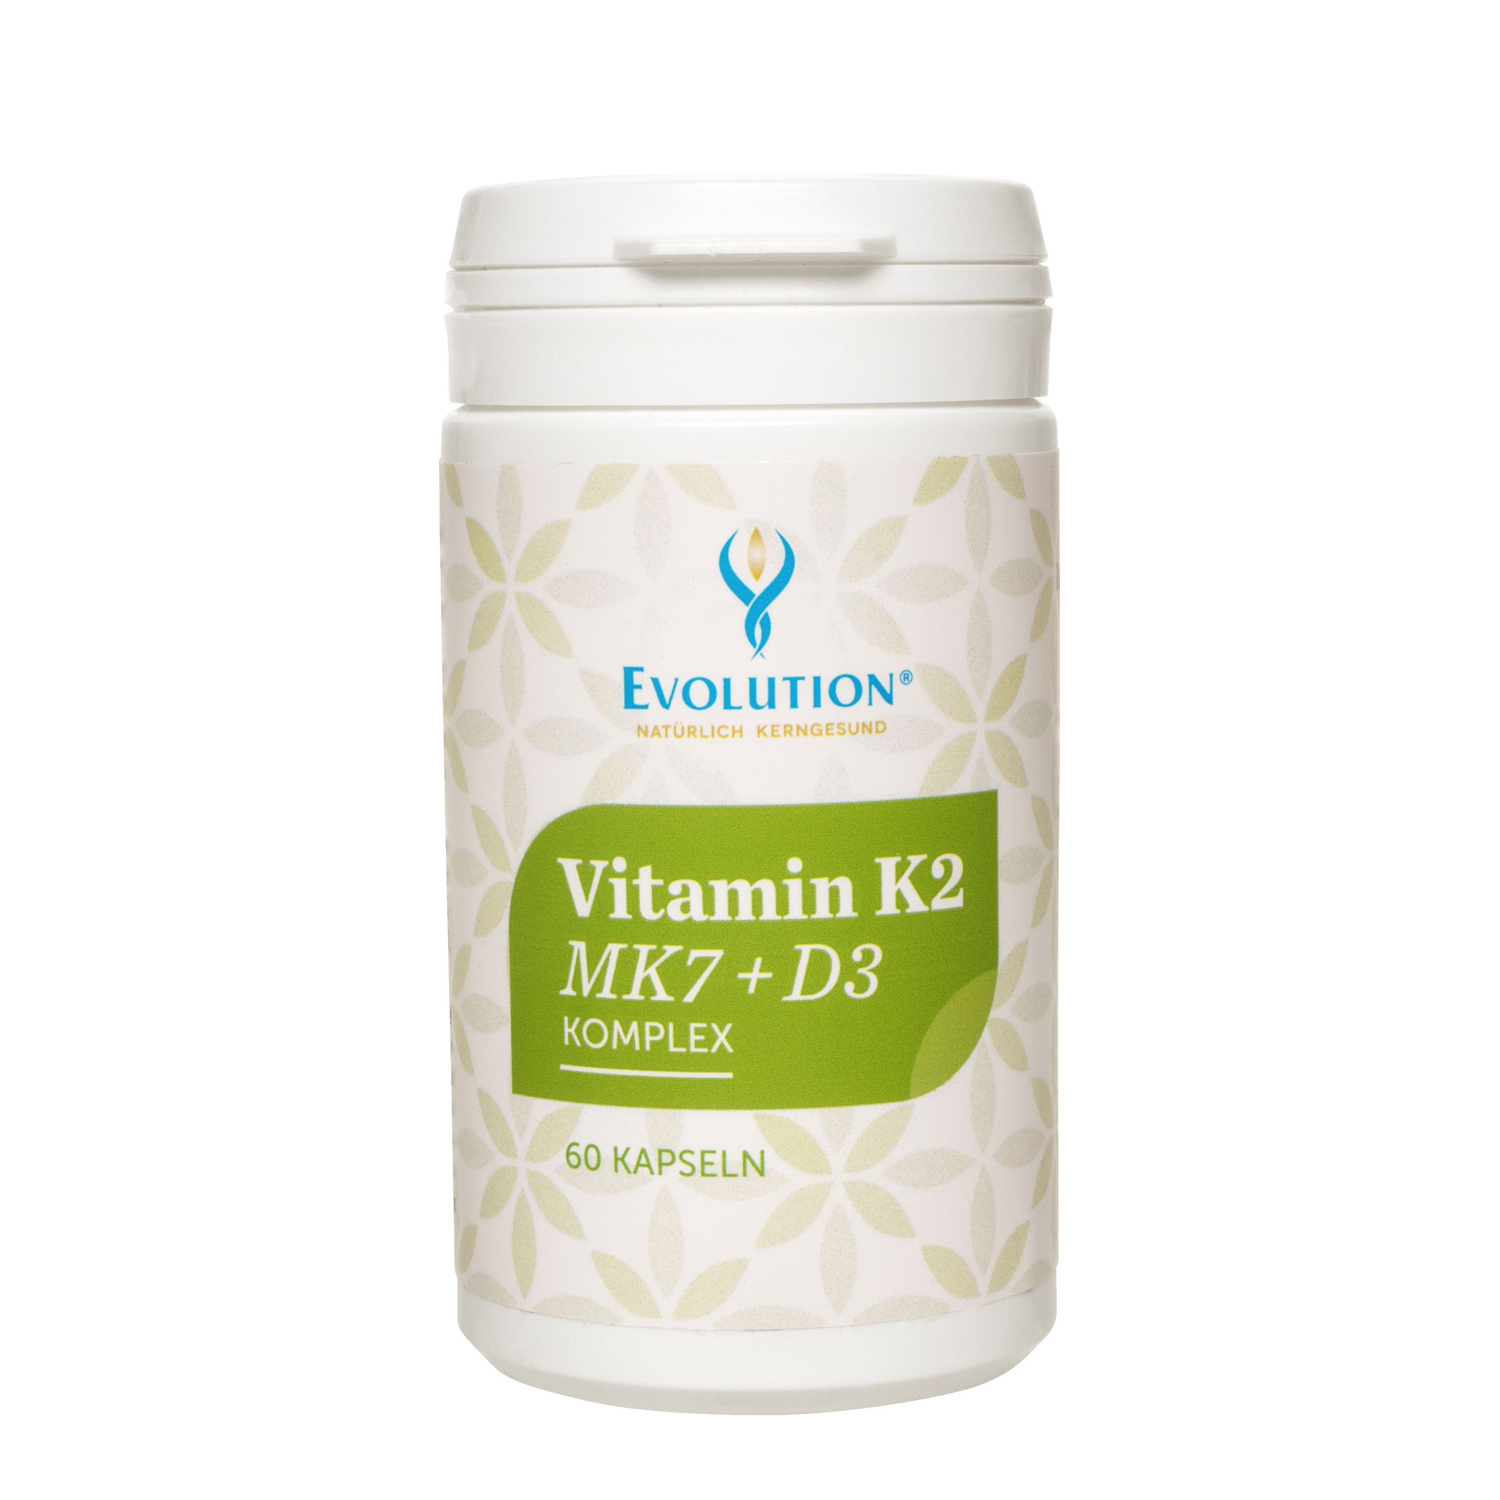 VITAMÍN K2 MK7 + D3 KOMPLEX (60 rastlinných kapsulí)